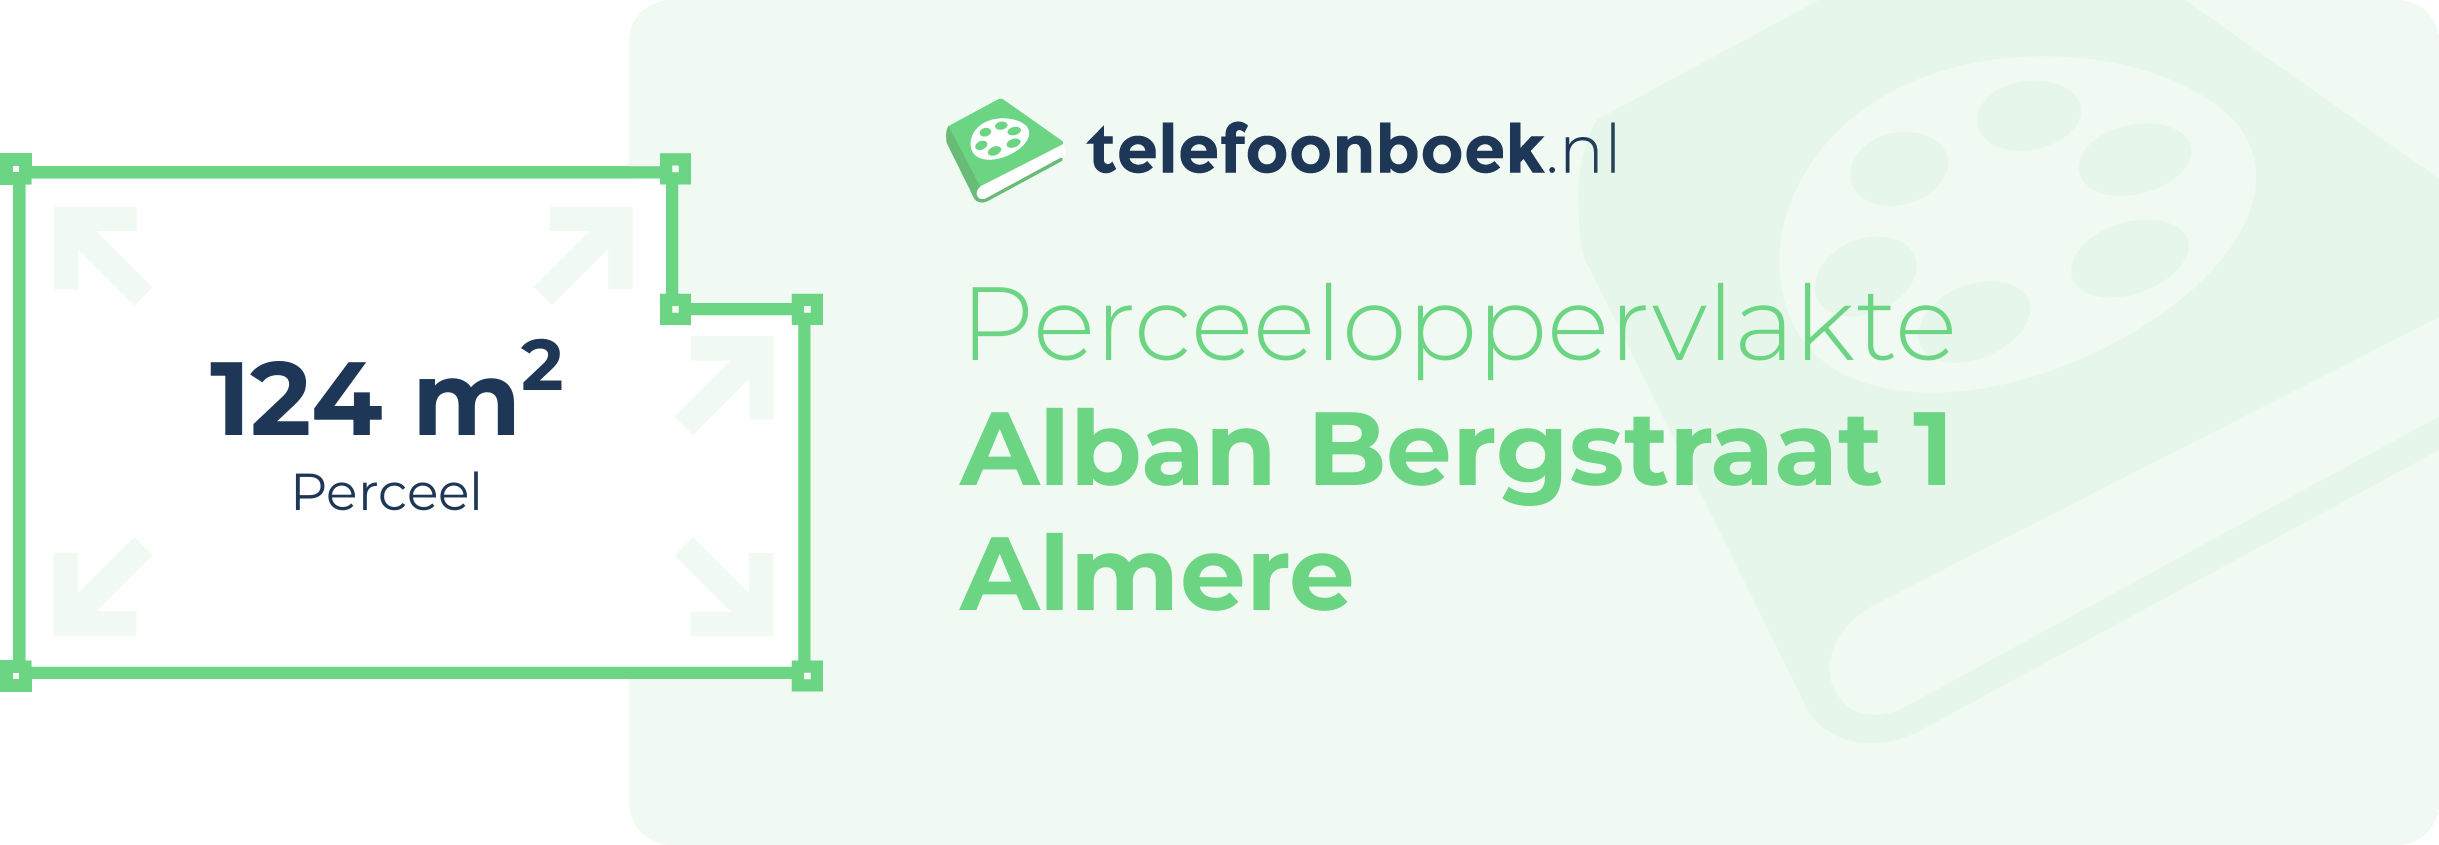 Perceeloppervlakte Alban Bergstraat 1 Almere